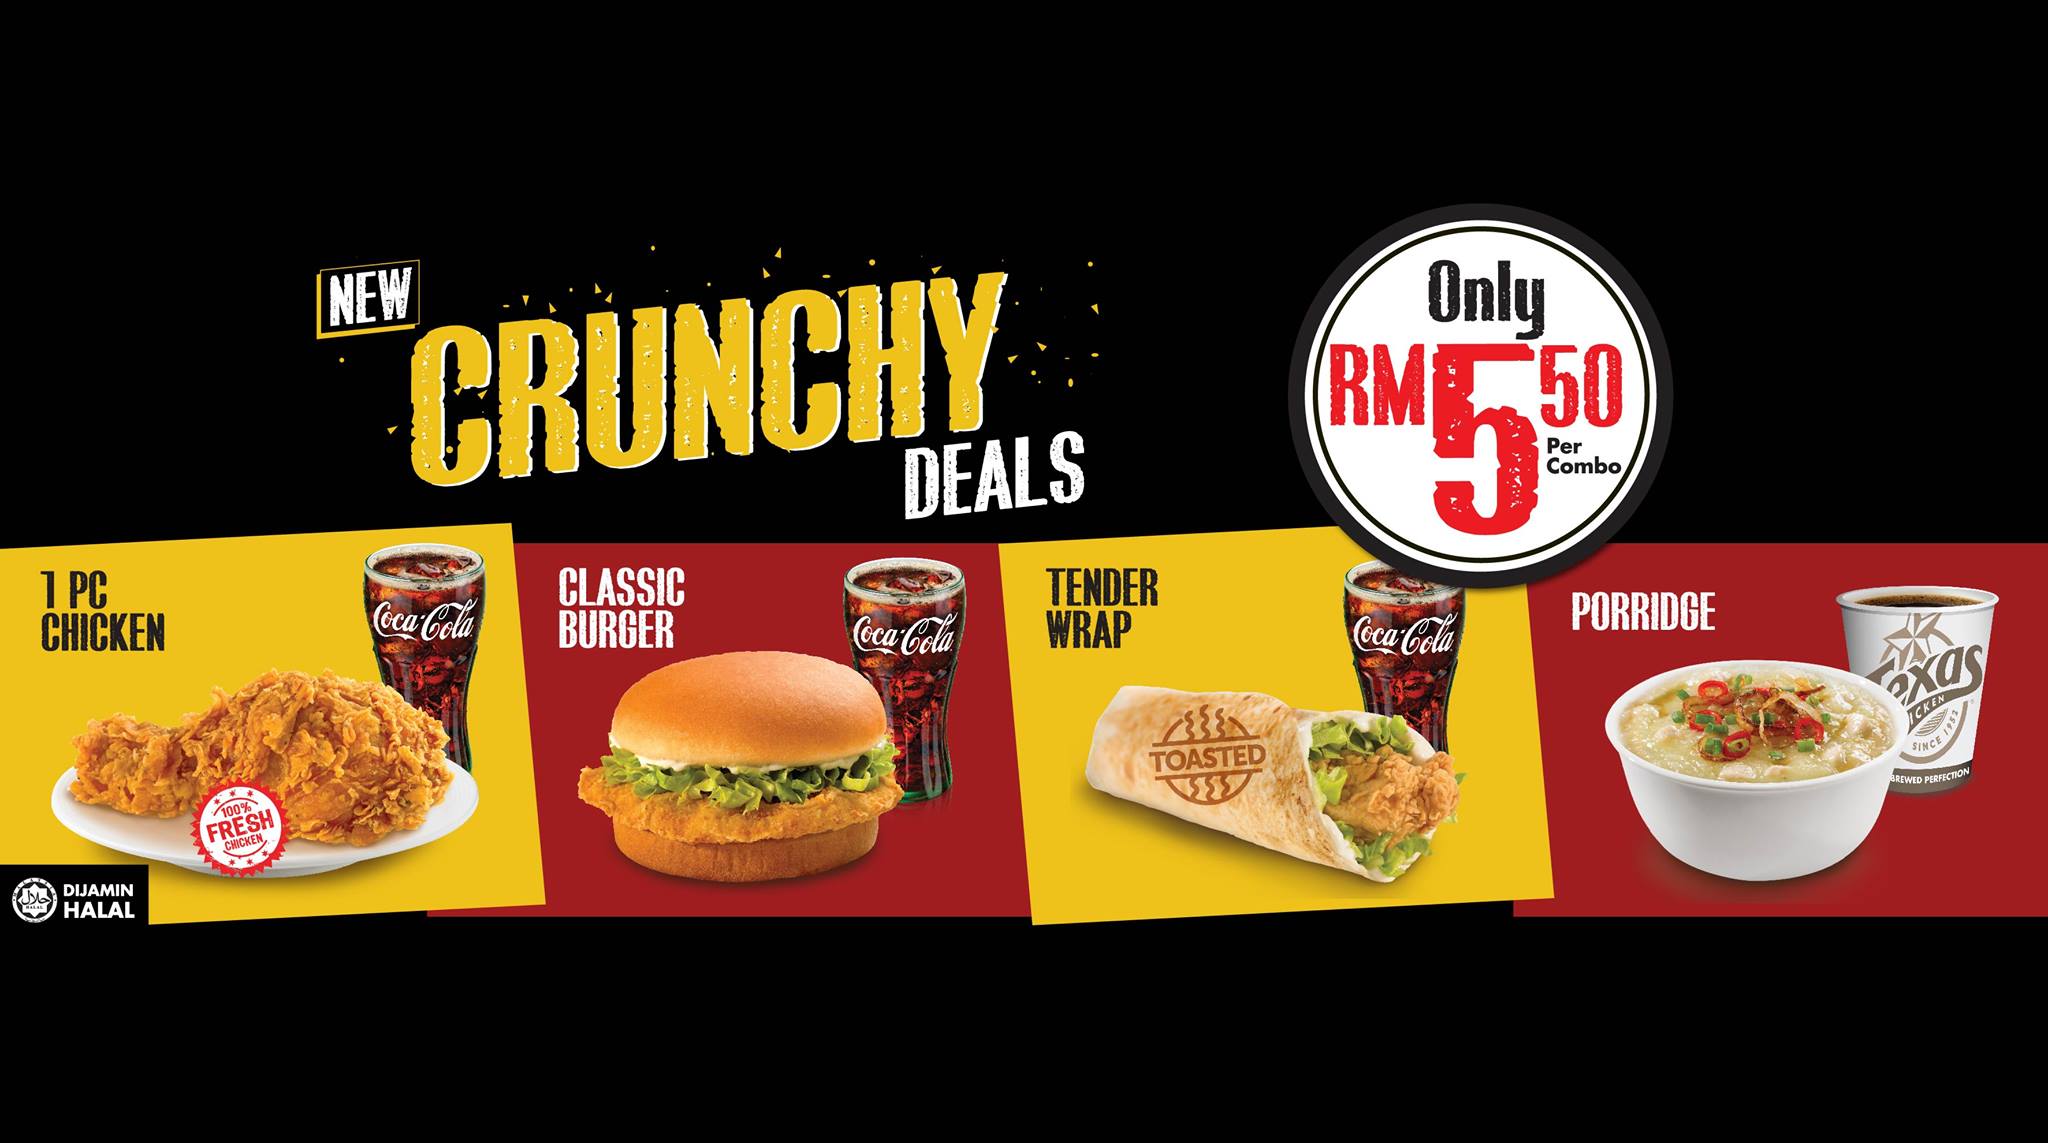 Texas Chicken New Crunchy Deals Hanya RM5.50!